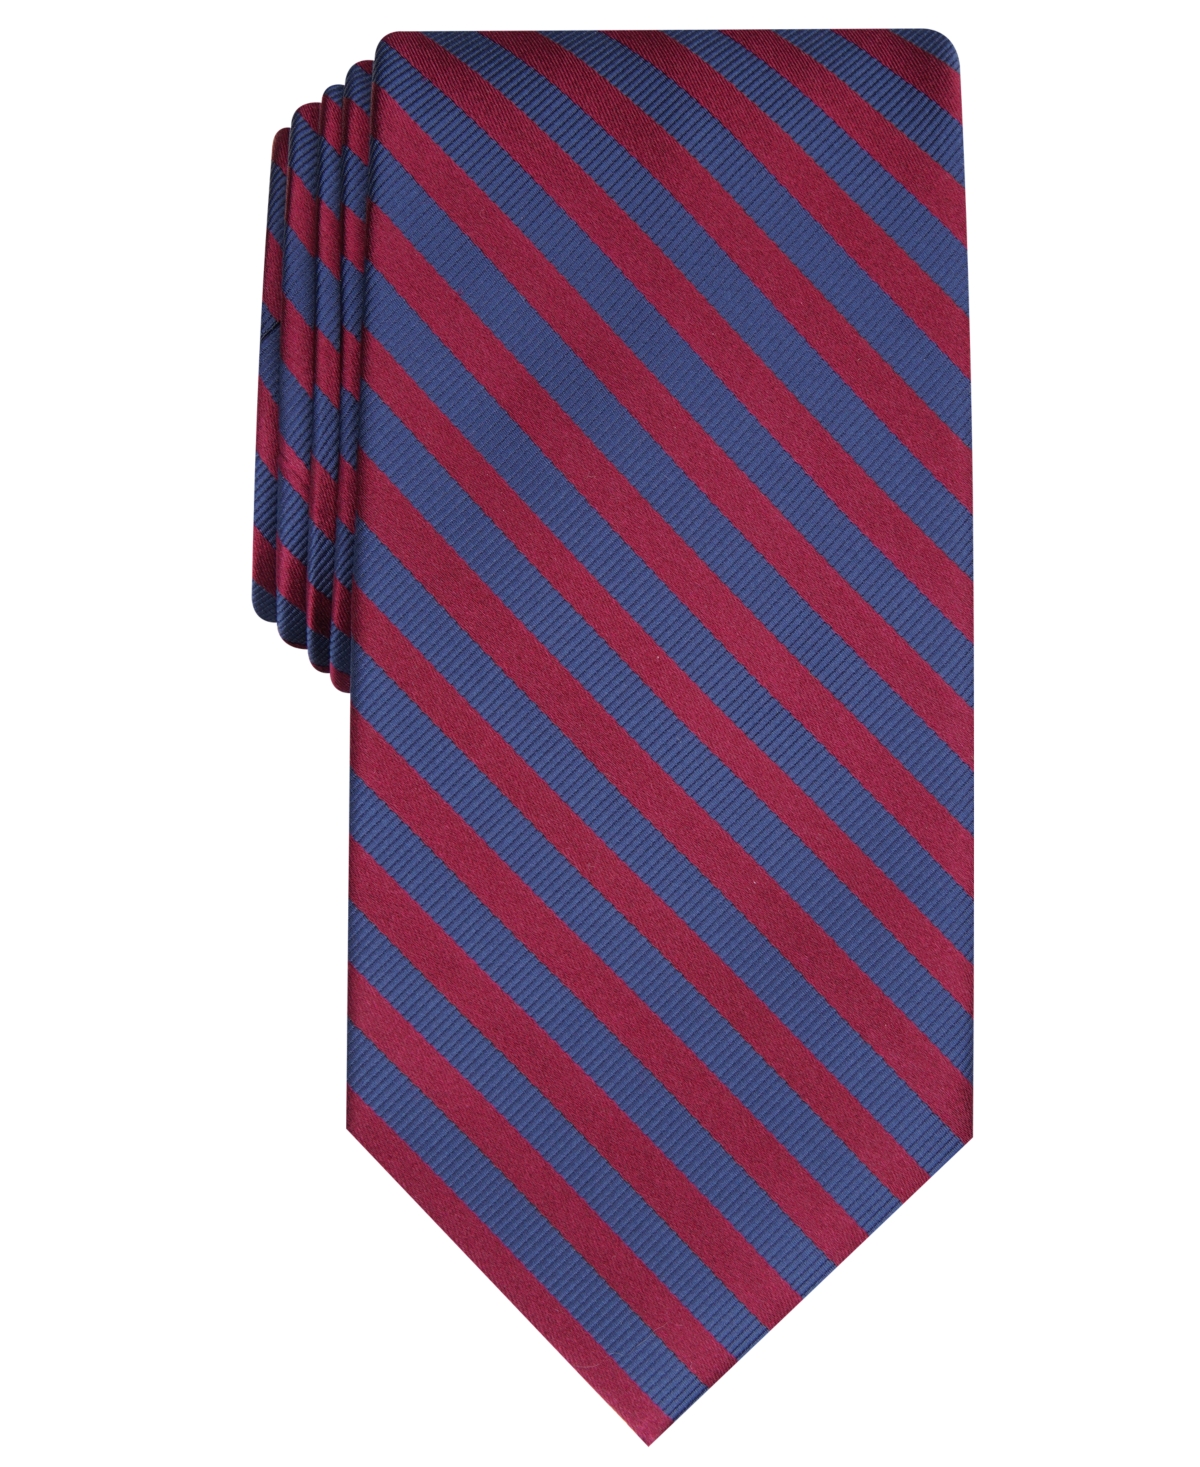 Men's Classic Stripe Tie, Created for Macy's - Navy